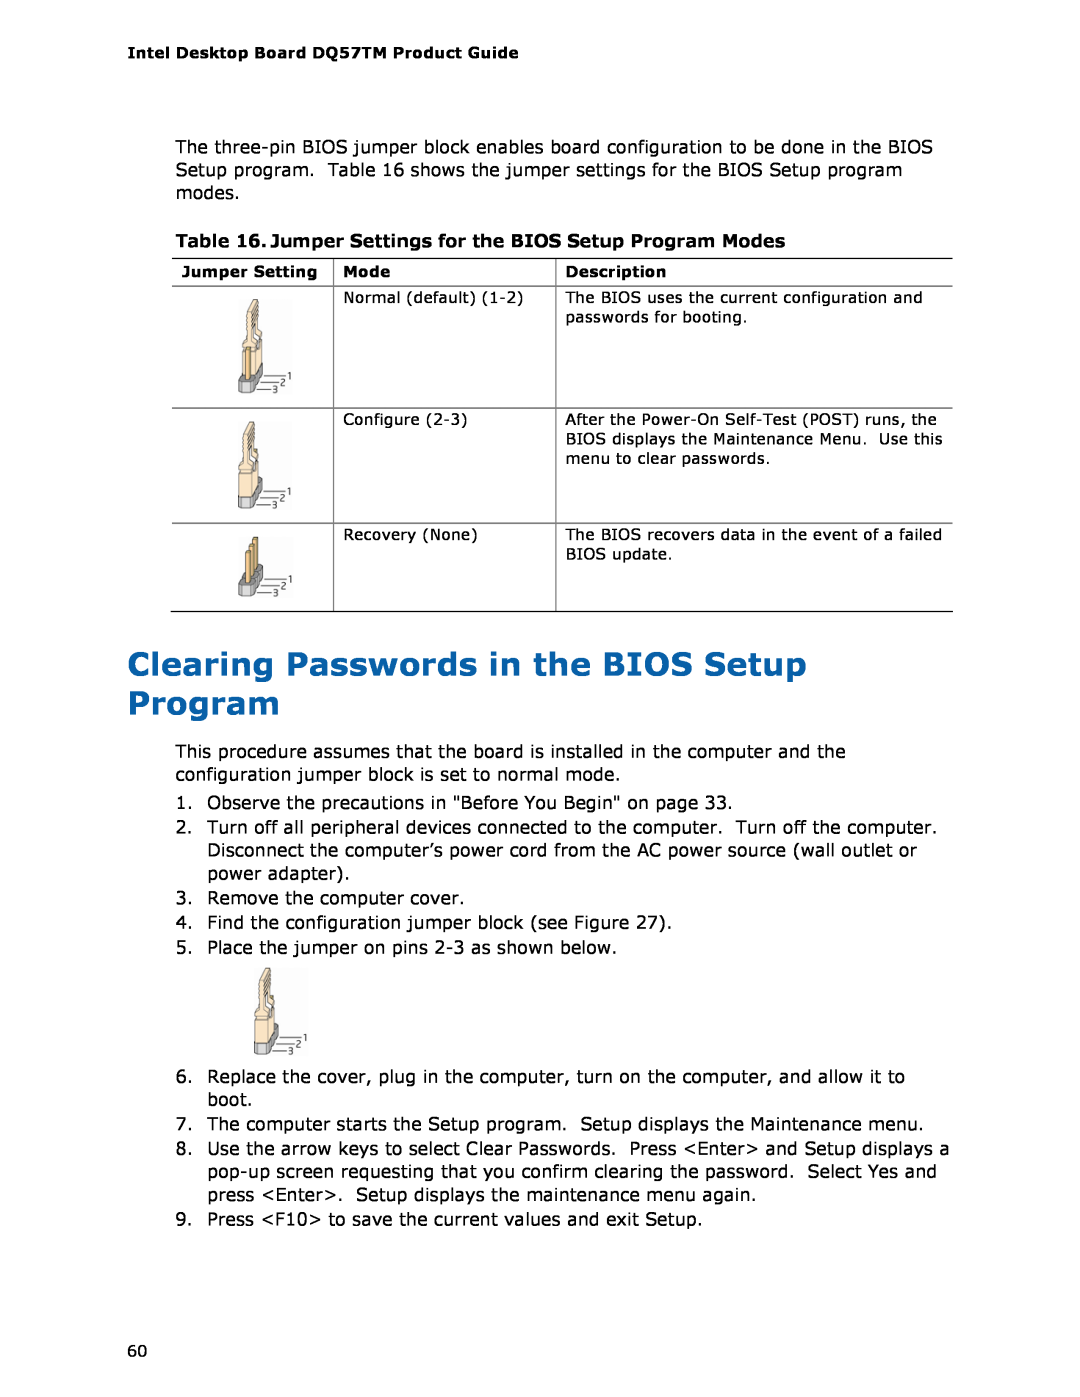 Intel DQ57TM manual Clearing Passwords in the BIOS Setup Program 